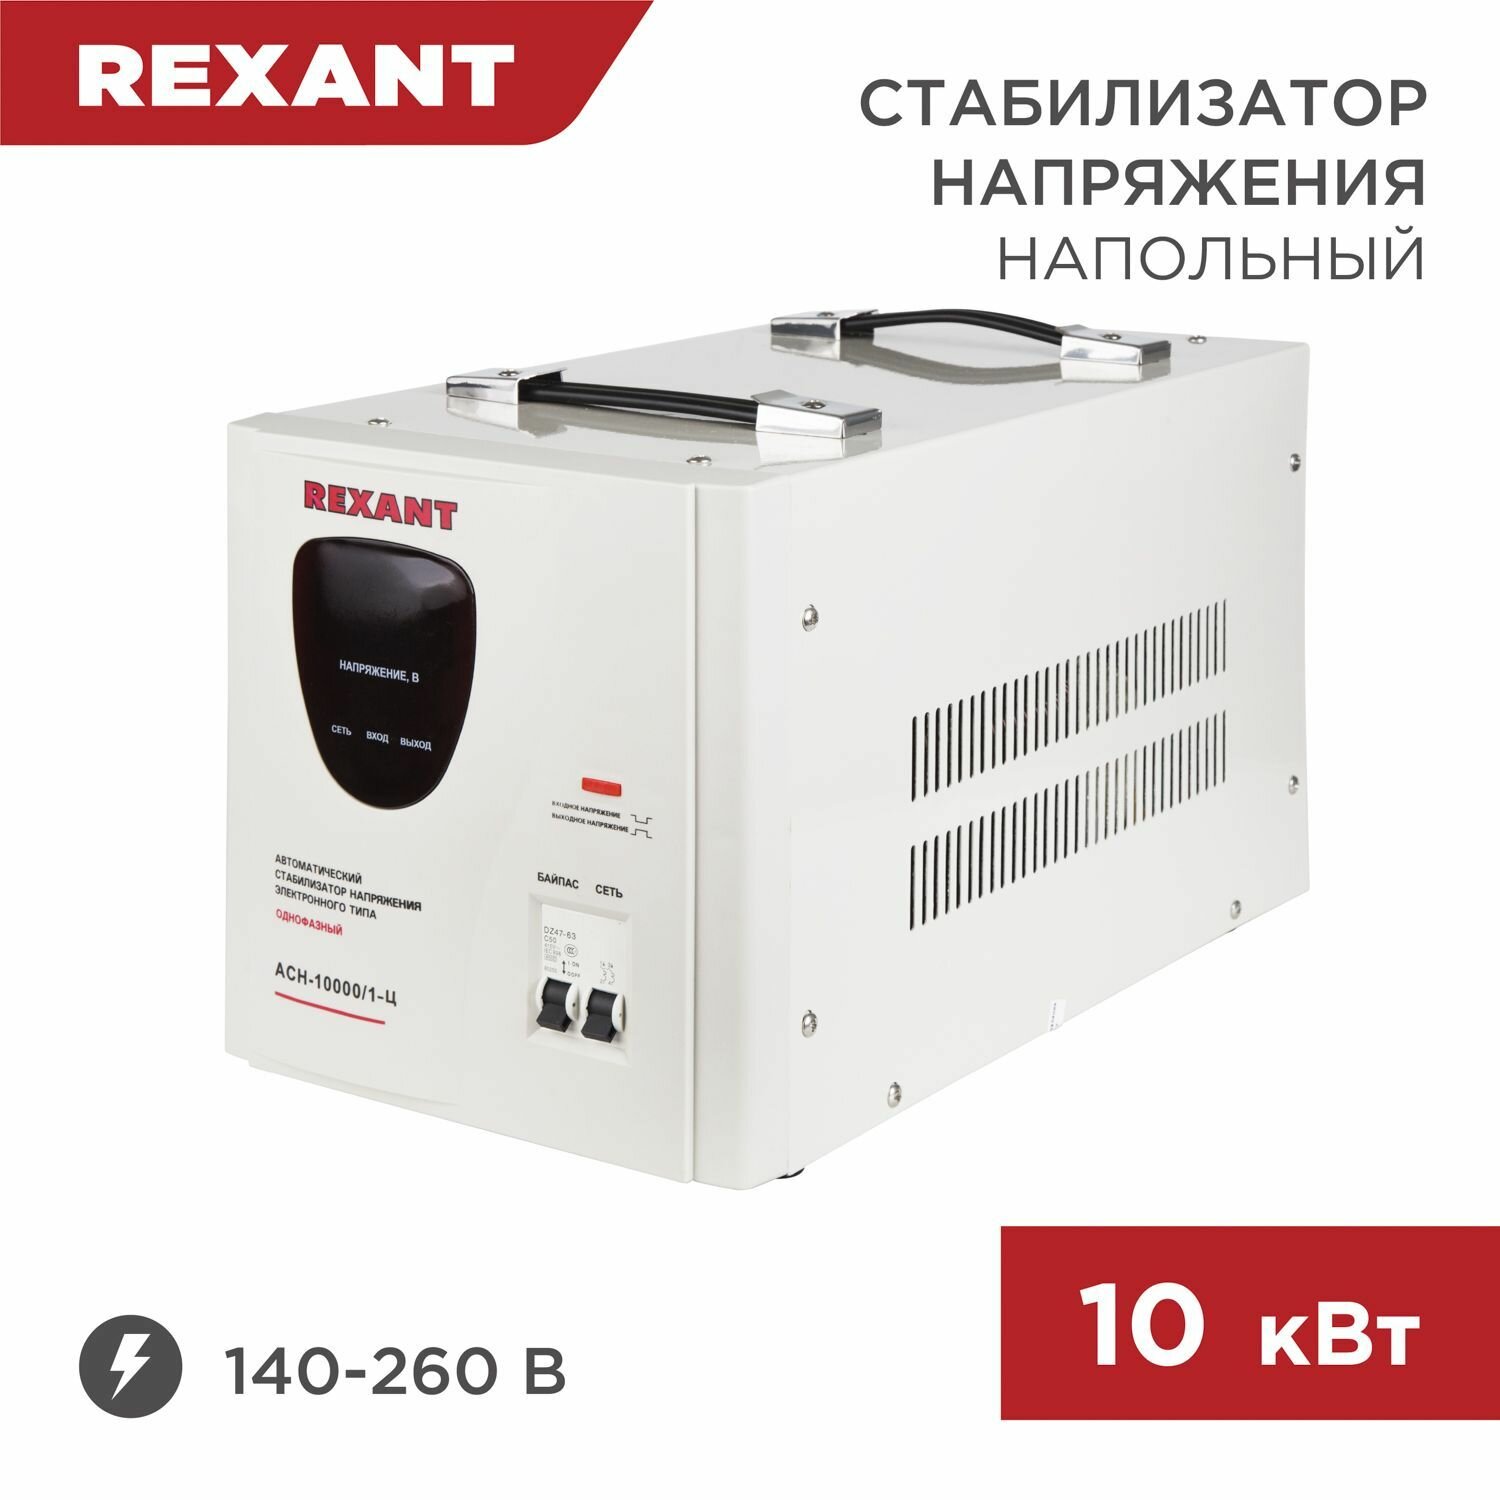 Стабилизатор напряжения АСН-10000/1-Ц REXANT 1 шт арт. 11-5007